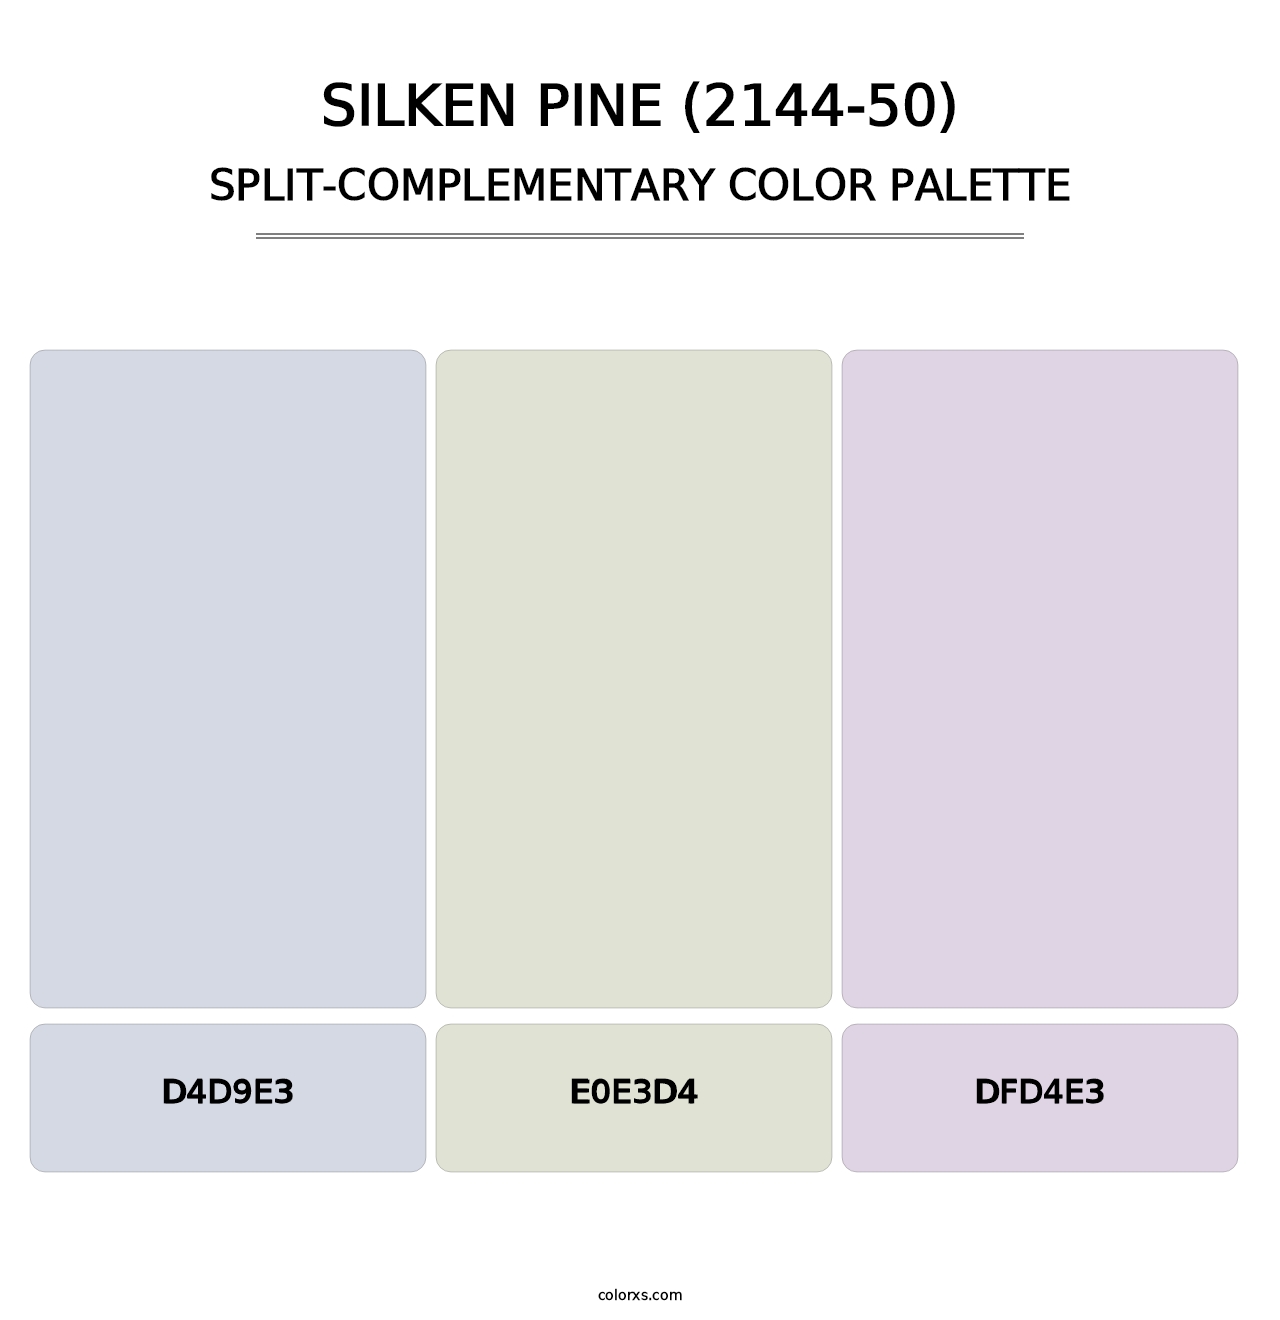 Silken Pine (2144-50) - Split-Complementary Color Palette